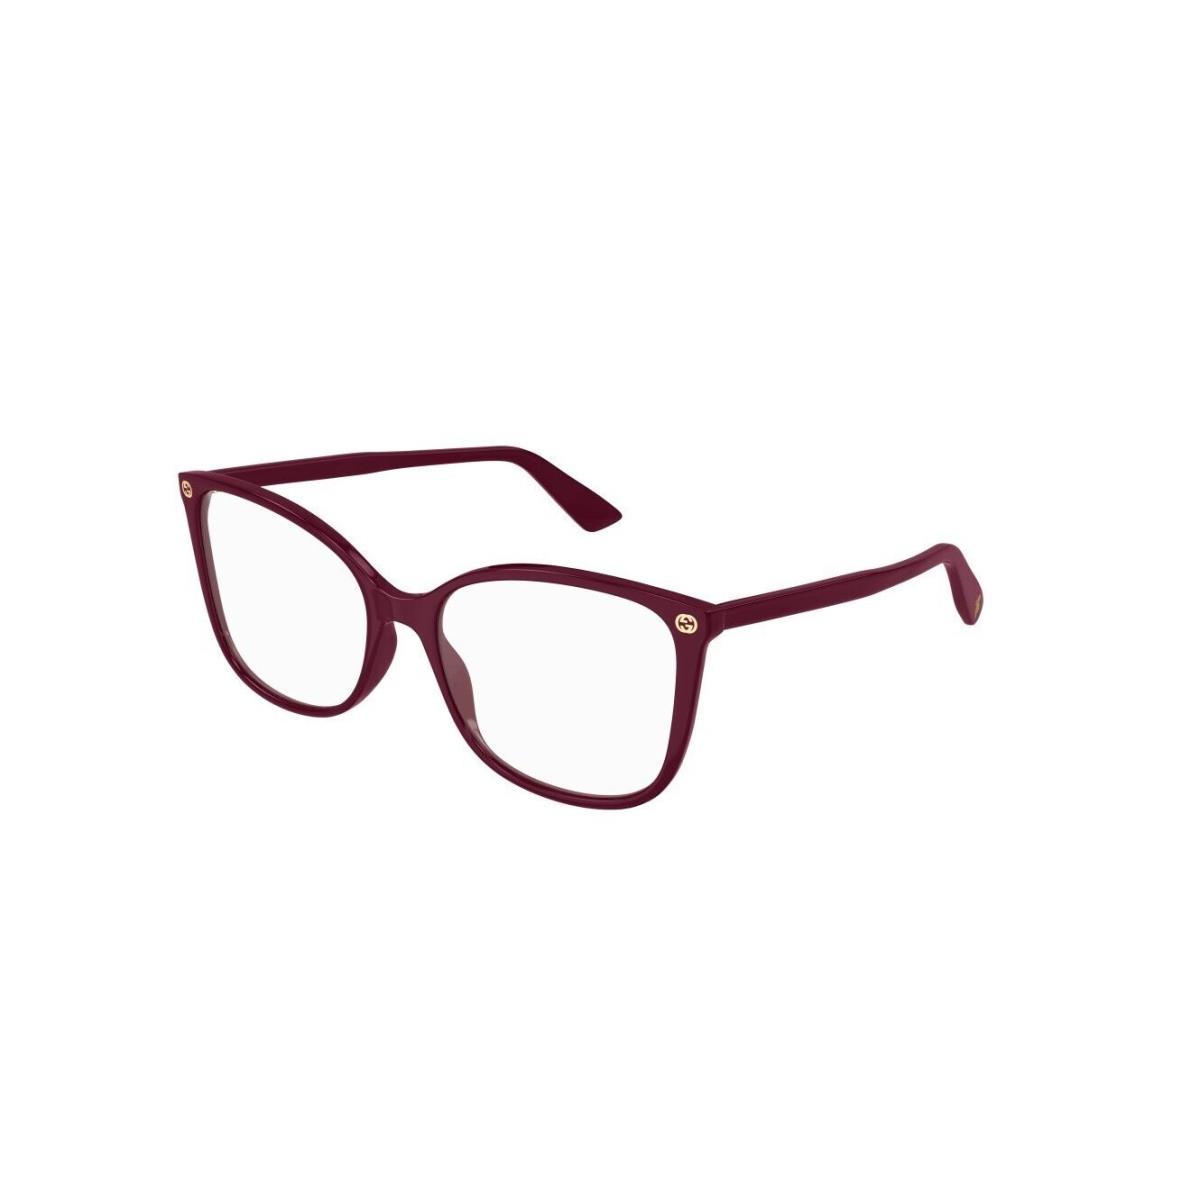 Gucci GG0026O 012 Burgundy Soft Square Women`s Eyeglasses - Frame: Burgundy, Lens: Clear